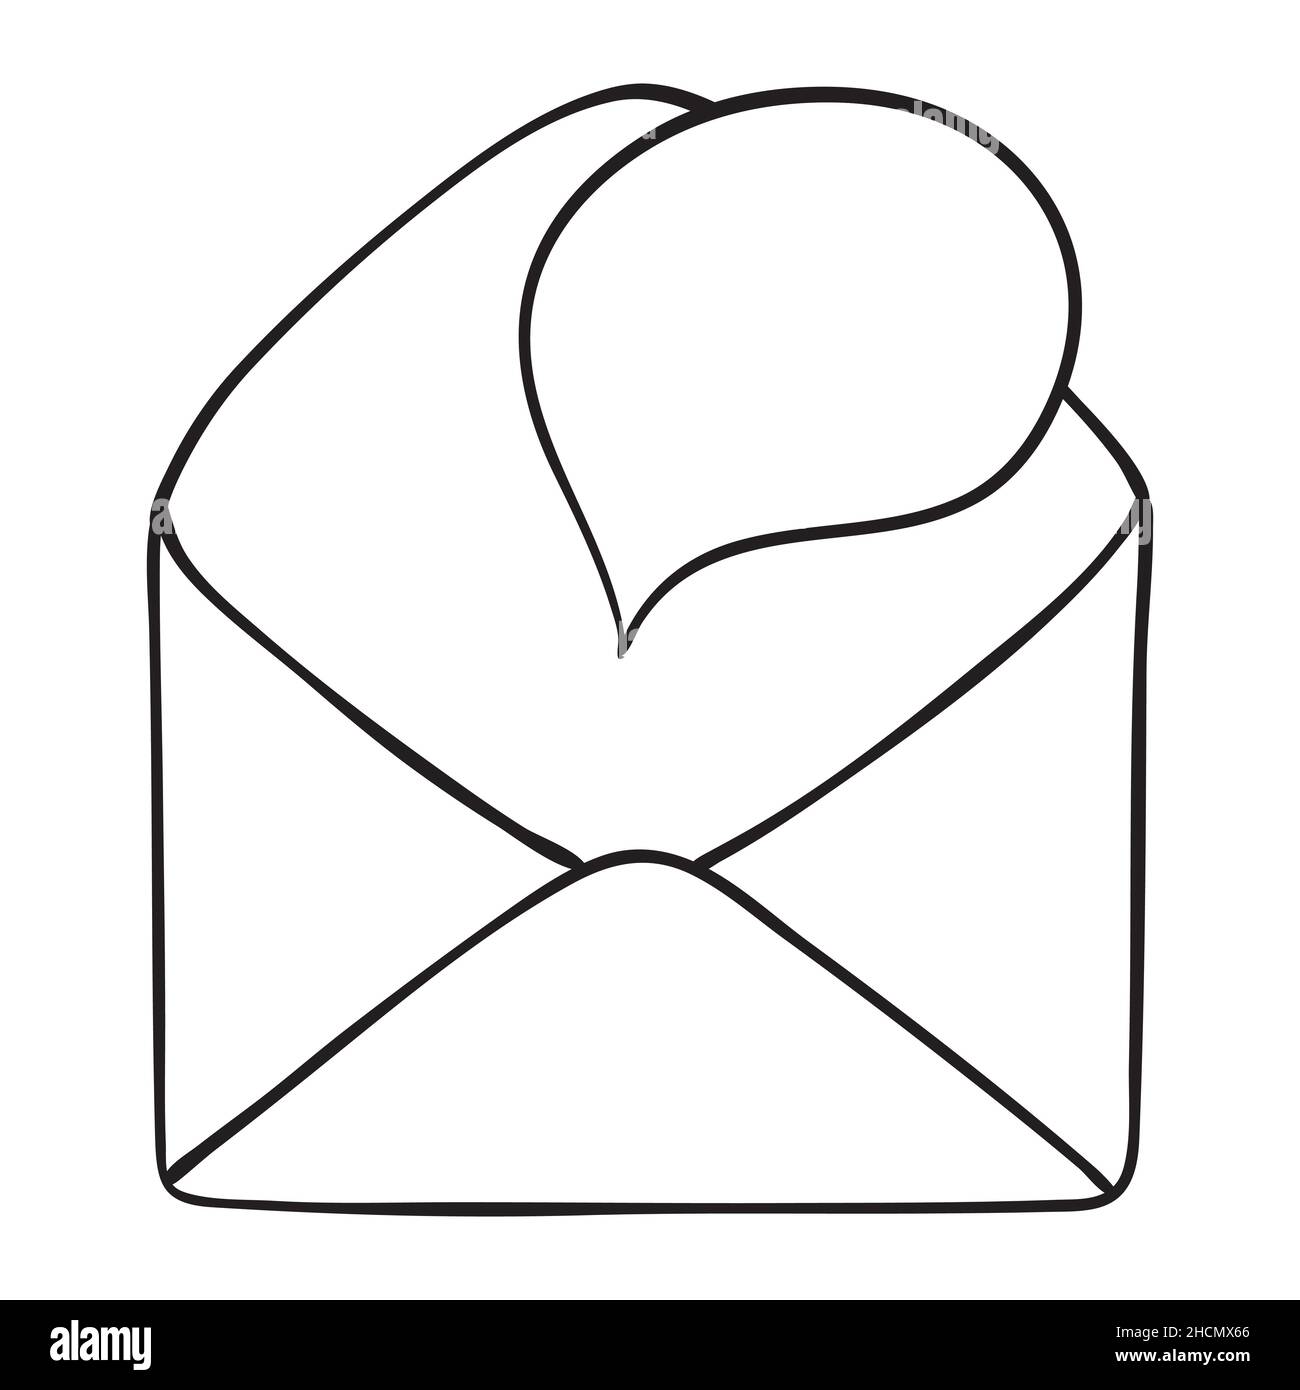 Envelope Letter Heart Sketch Vector Illustration Stock Vector Royalty  Free 1894990063  Shutterstock